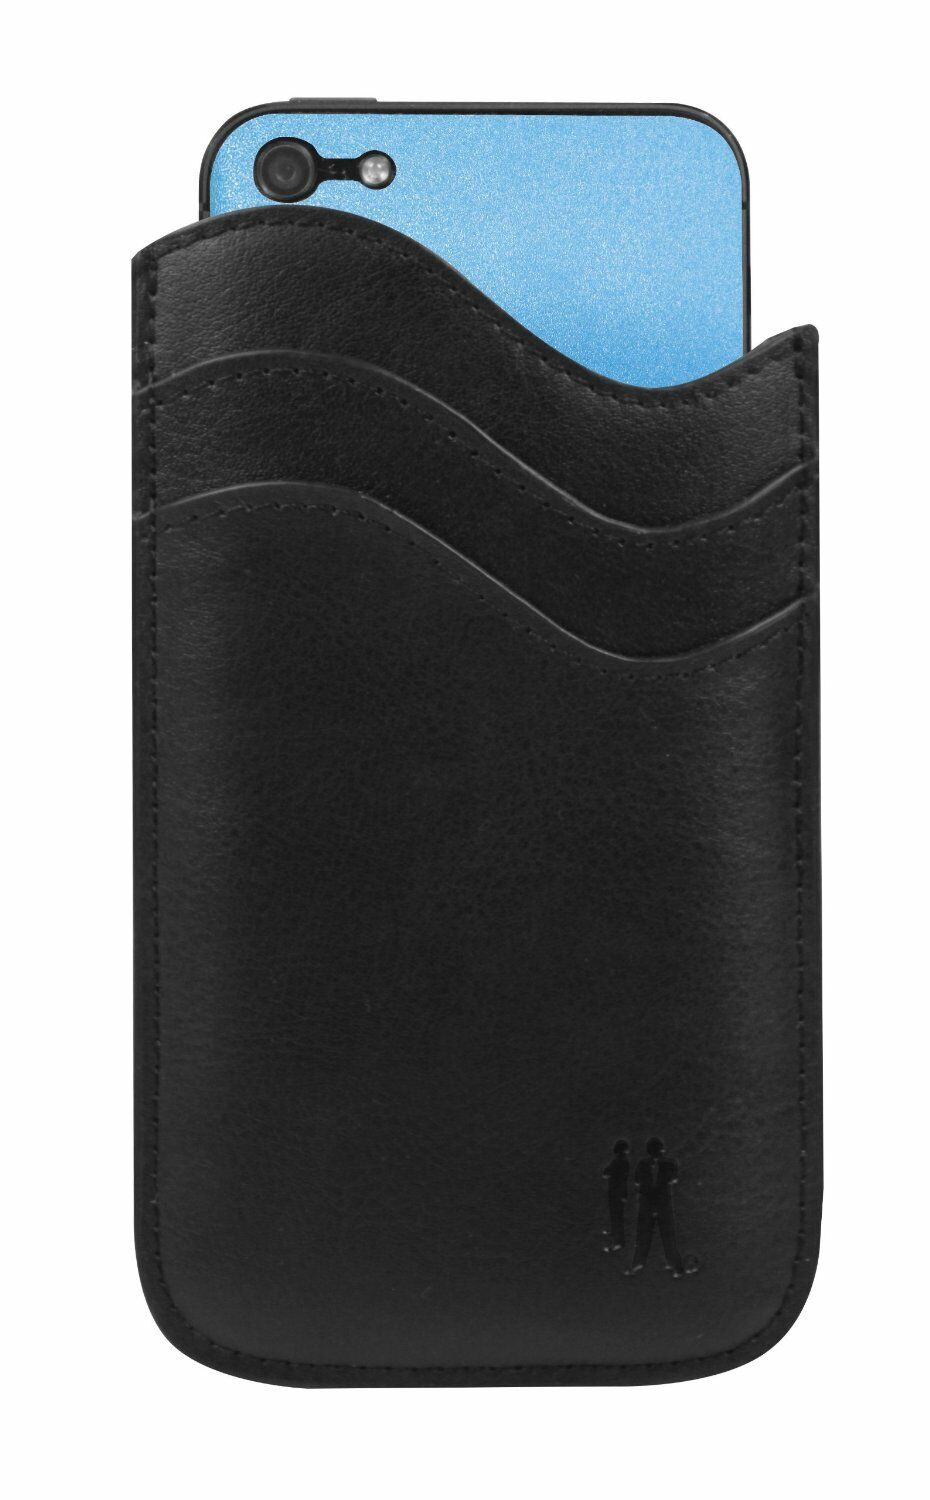 BodyGuardz BZ-KI5RB-0912 Pocket Case for iPhone 5 Black/Blue